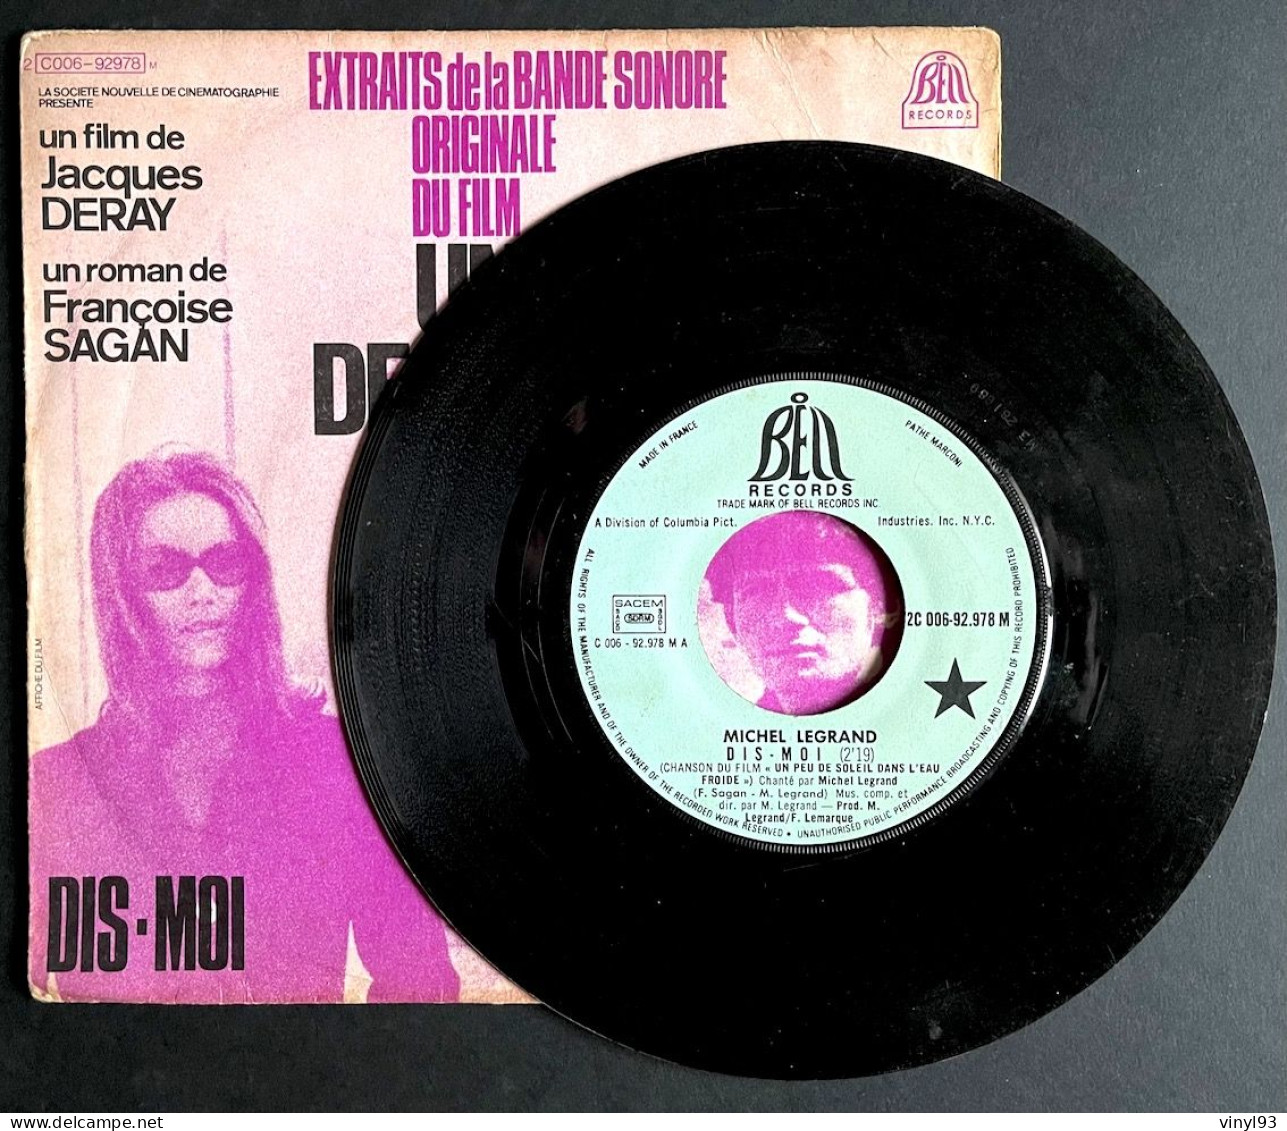 1971 - SP 45T B.O Film De M.Deray "Un Peu De Soleil Dans L'eau Froide" - Musique Michel Legrand - Bell C006 92978 - Música De Peliculas